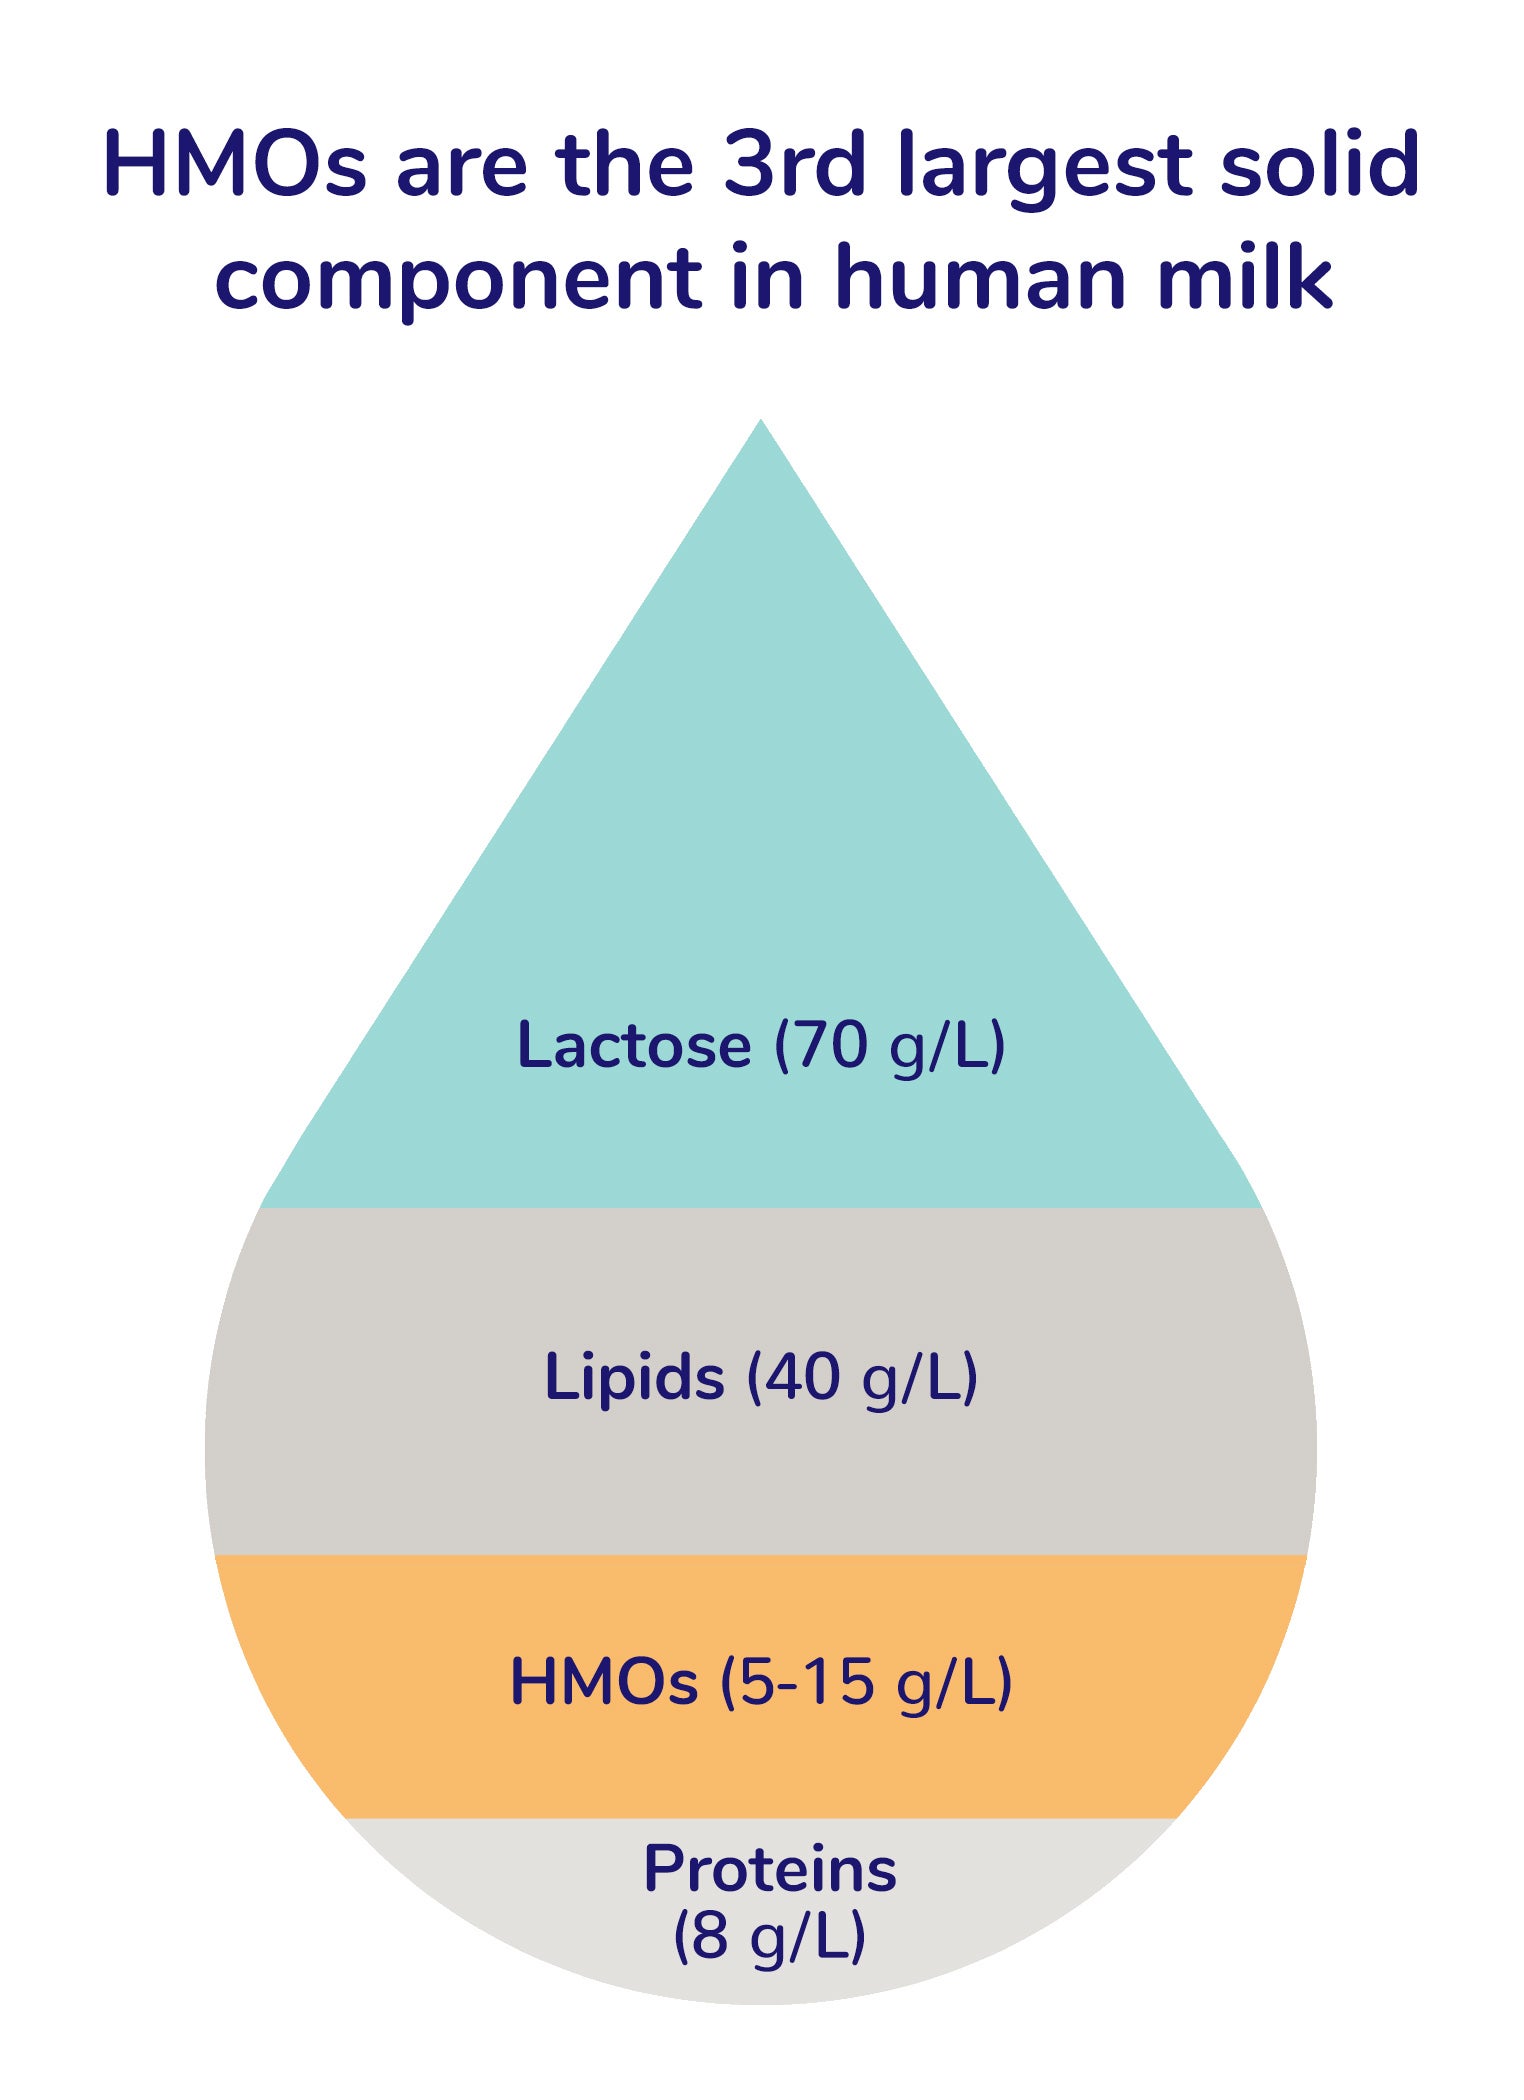 Human milk composition